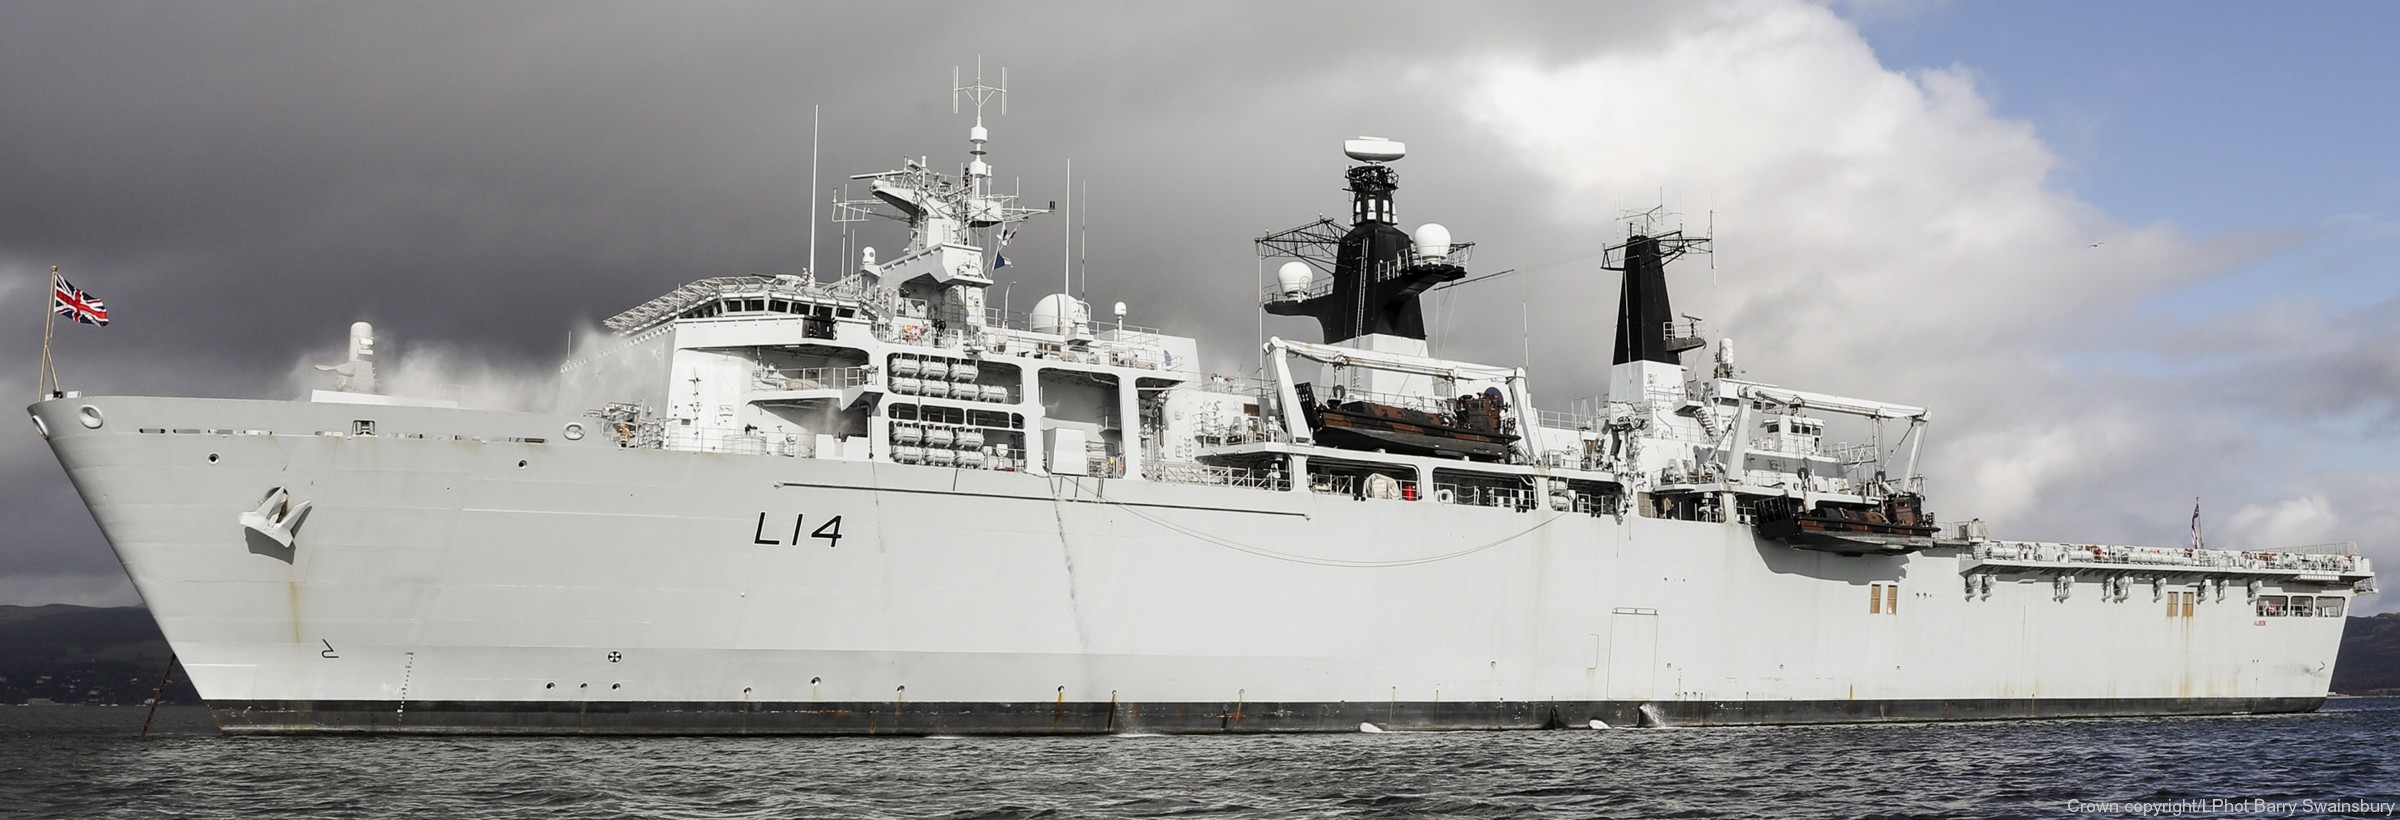 l14 hms albion amphibious transport dock assault ship landing platform lpd royal navy 30